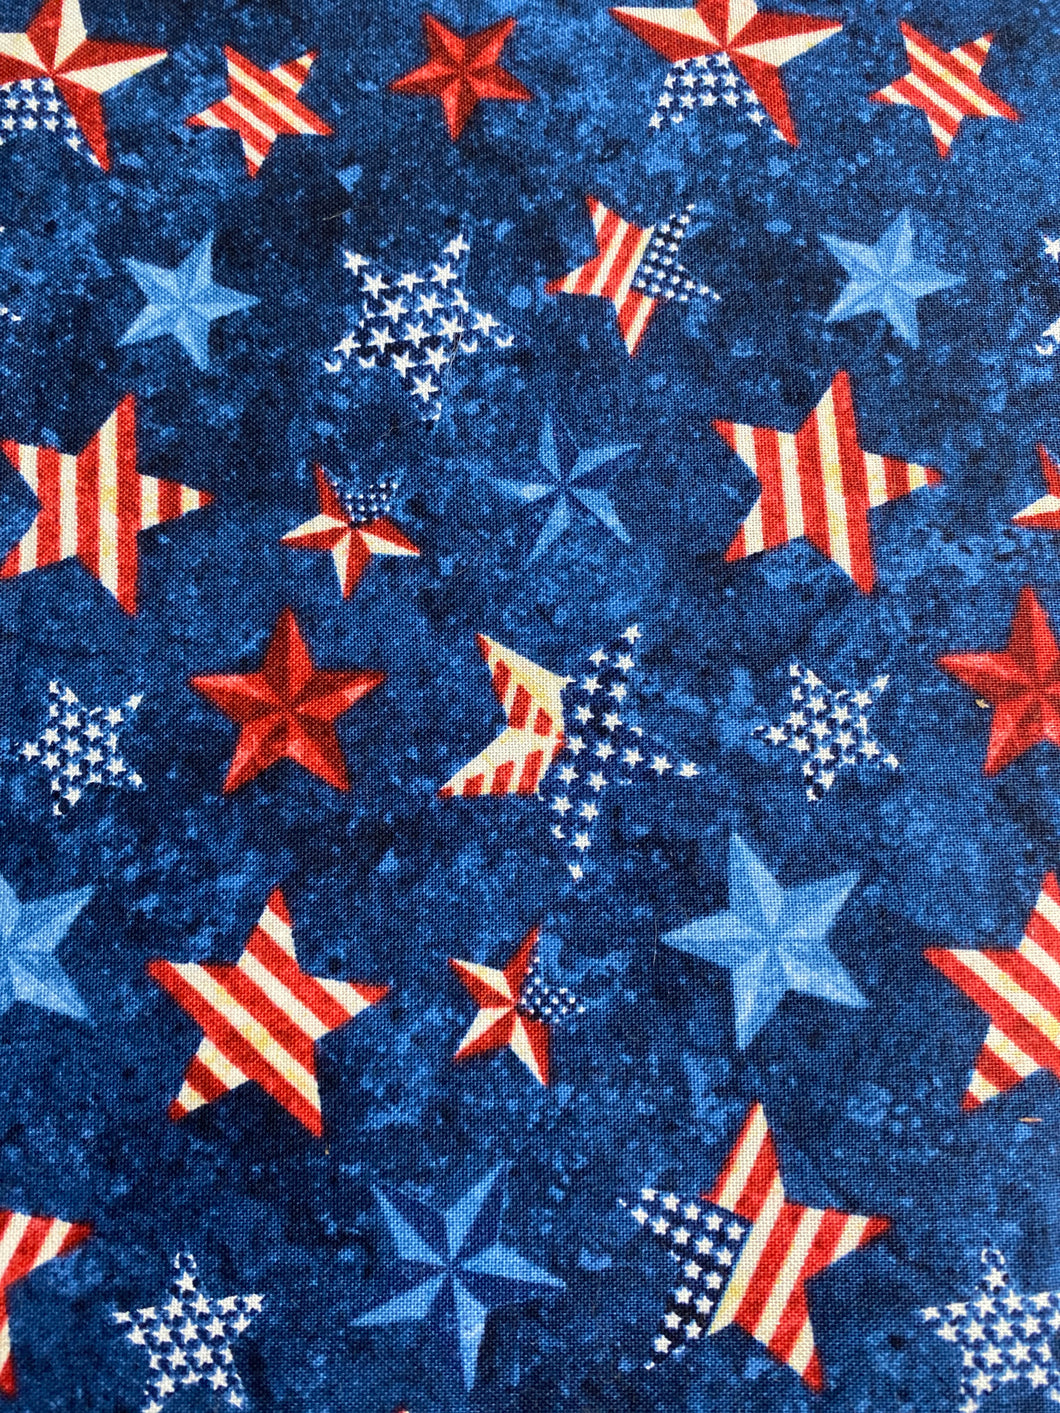 Stars and Stripes 10th Anniversary patriotic stars